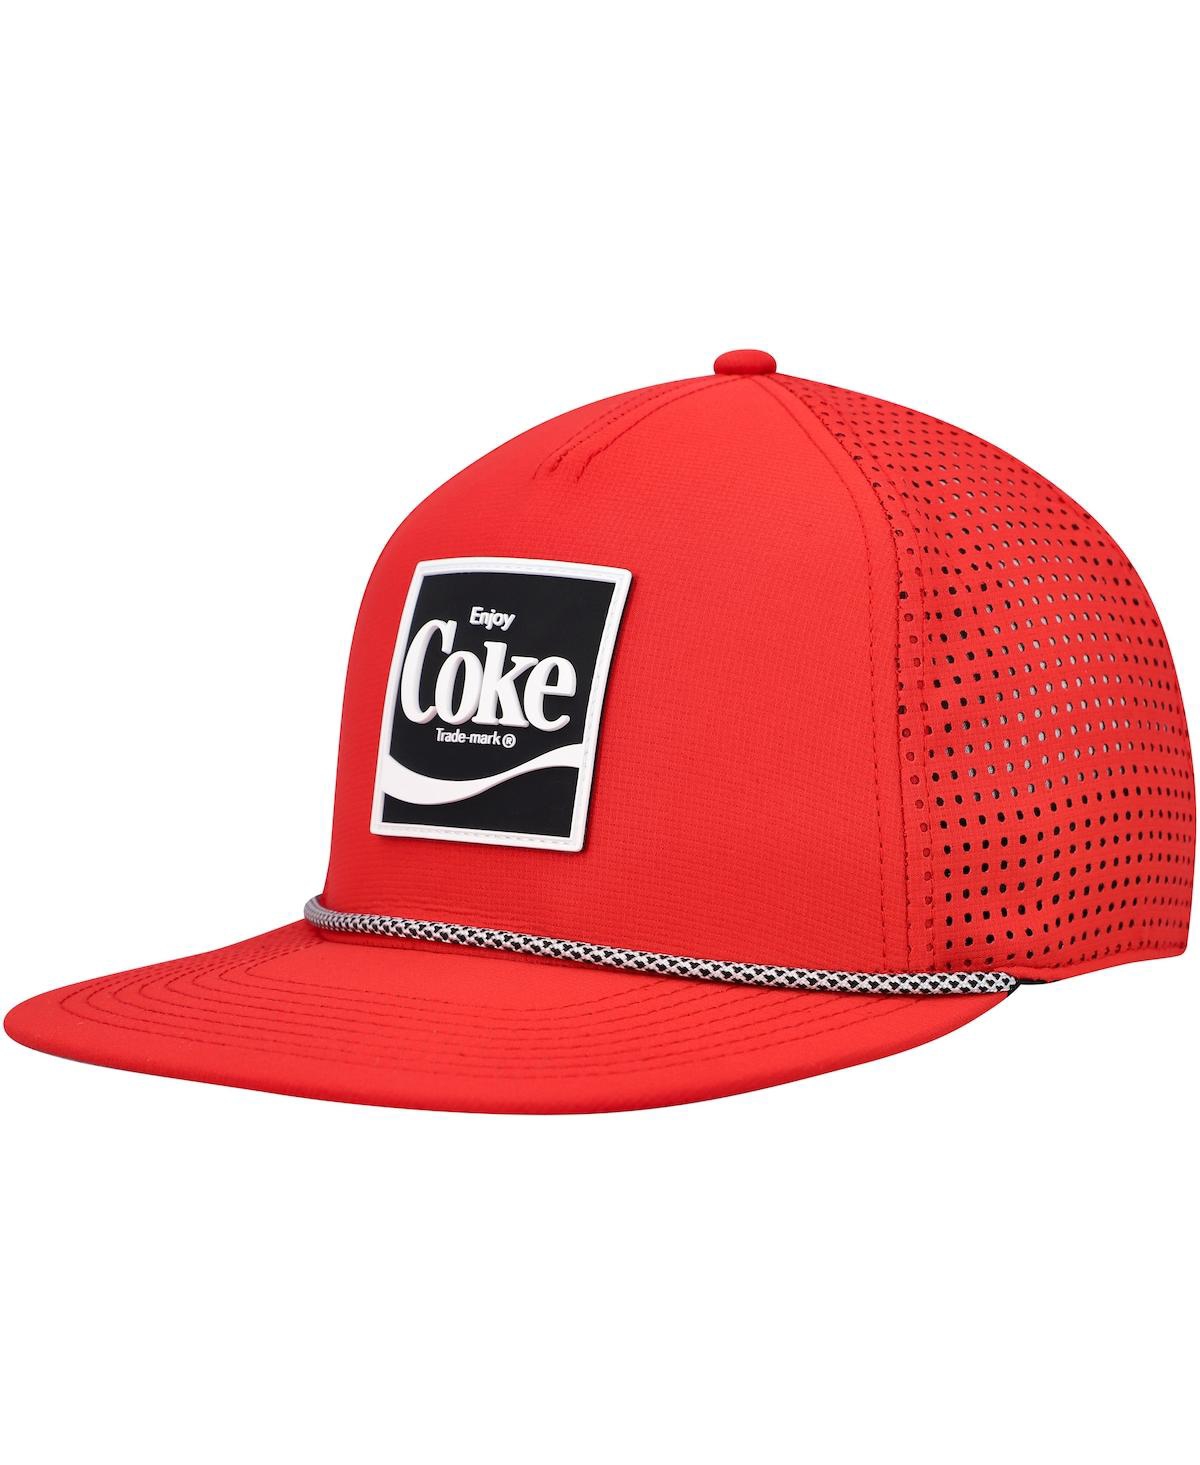 American Needle Men's Red Coca-cola Buxton Pro Adjustable Hat